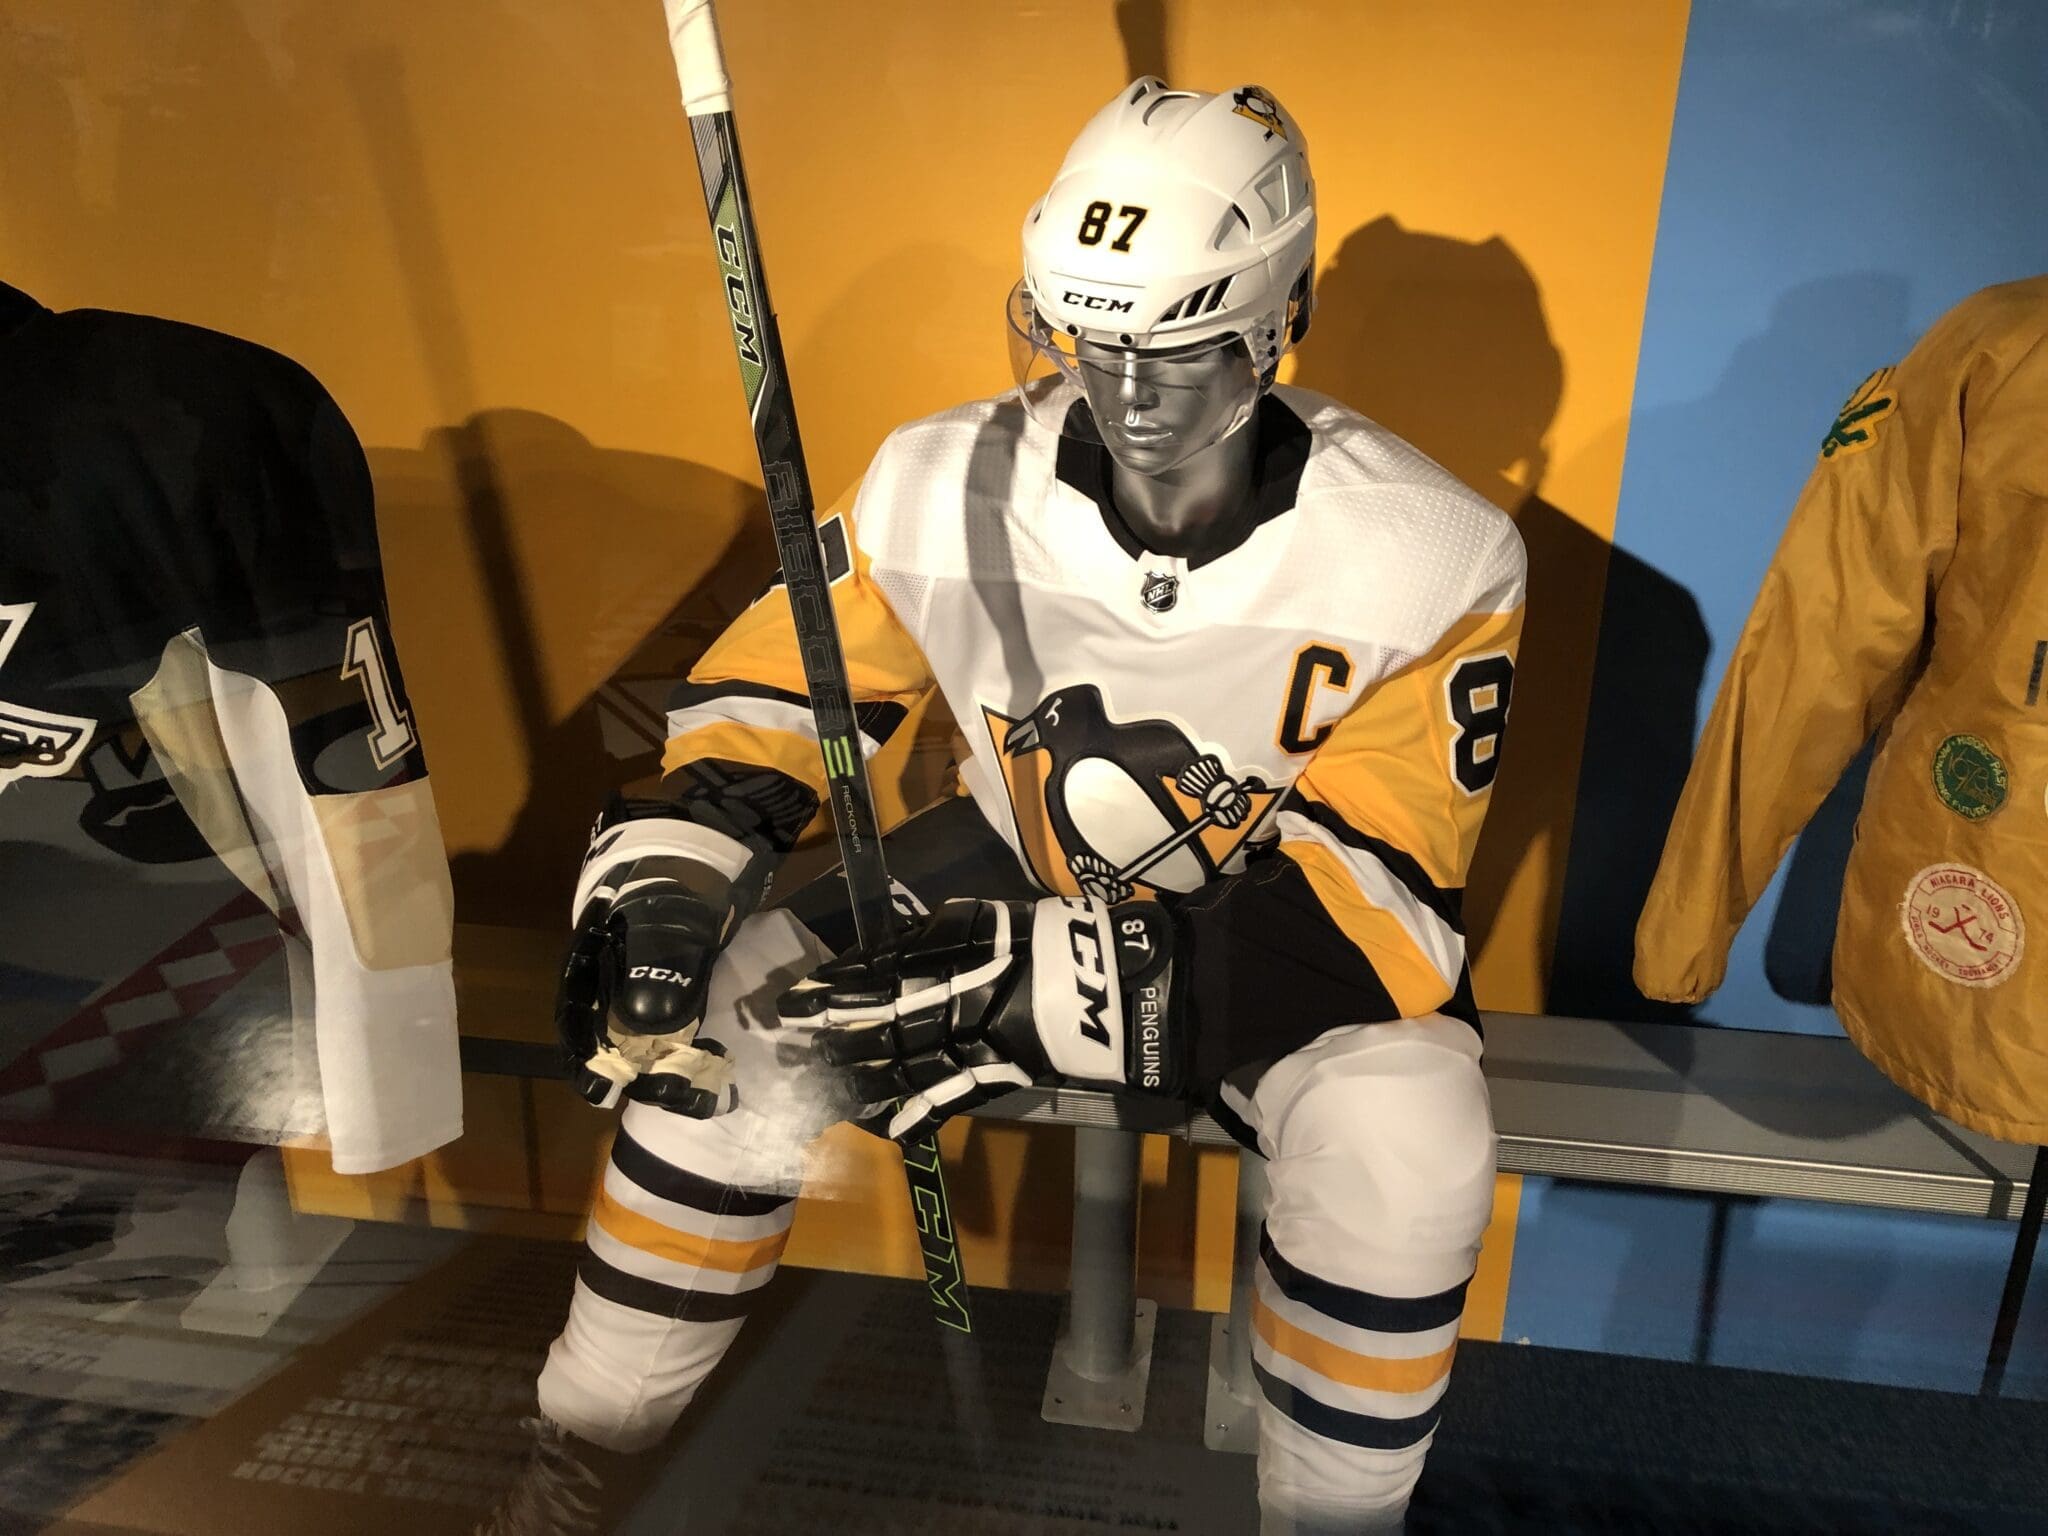 Reebok Sidney Crosby Pittsburgh Penguins Replica Third Jersey - Toddler